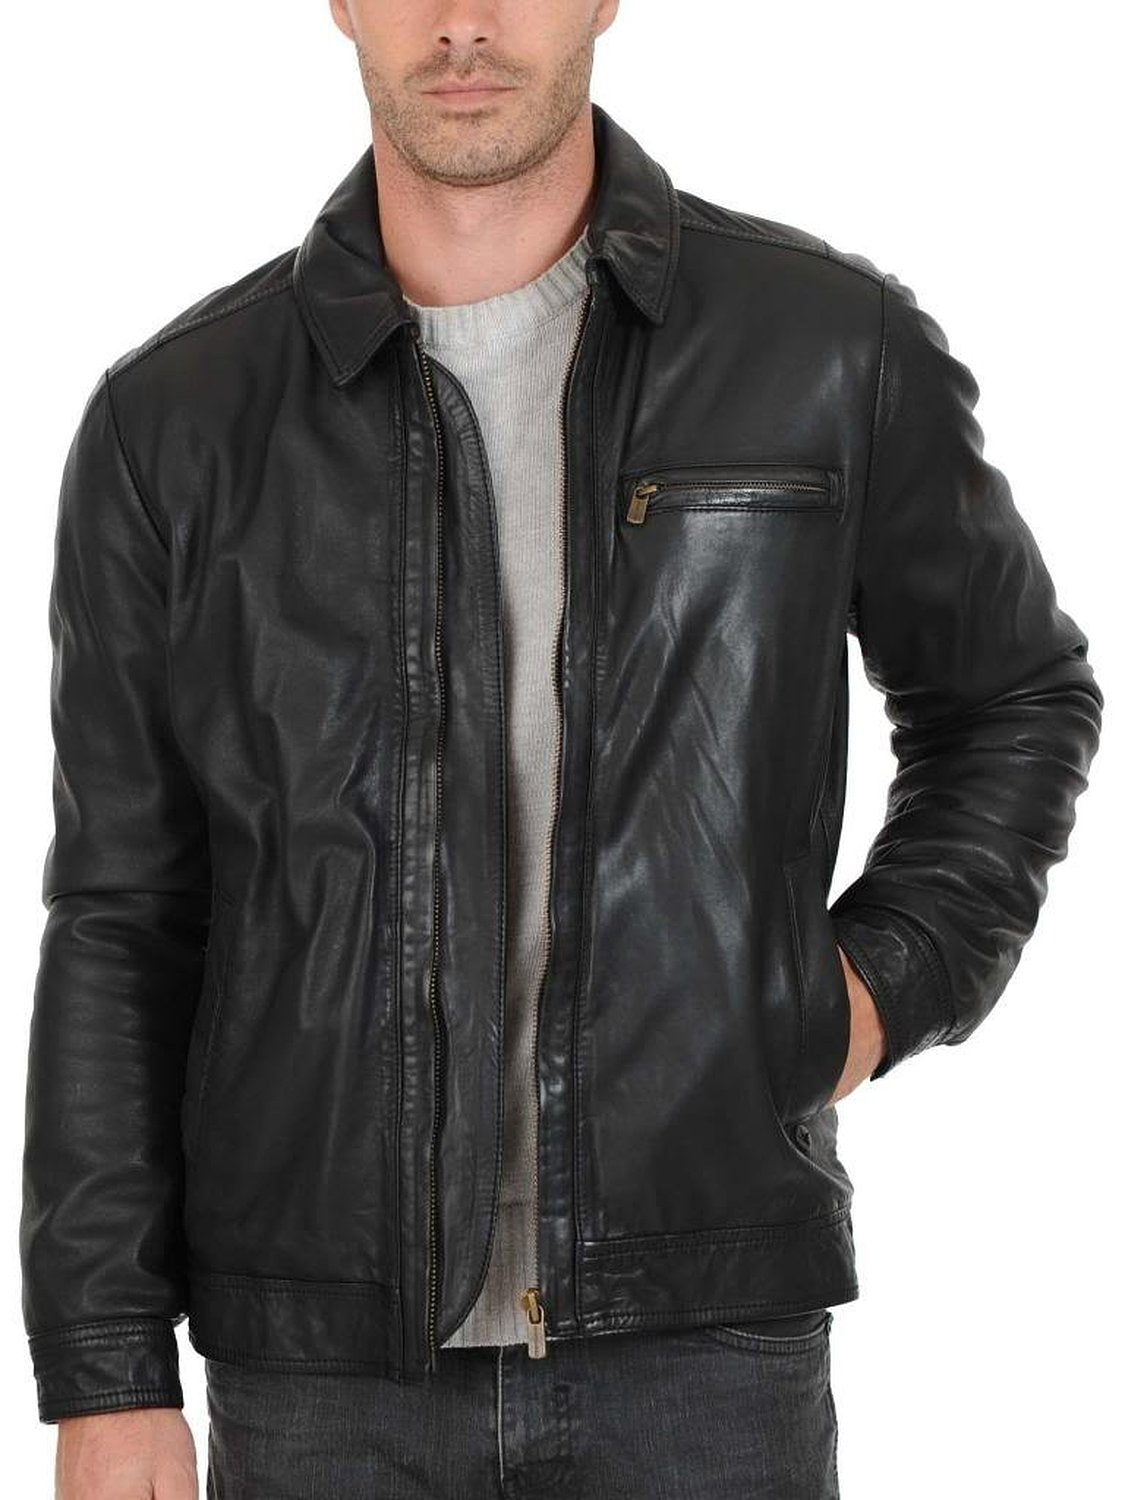 Leather Jackets Hub Mens Genuine Cowhide Leather Jacket (Black, Aviator Jacket) - 1501584